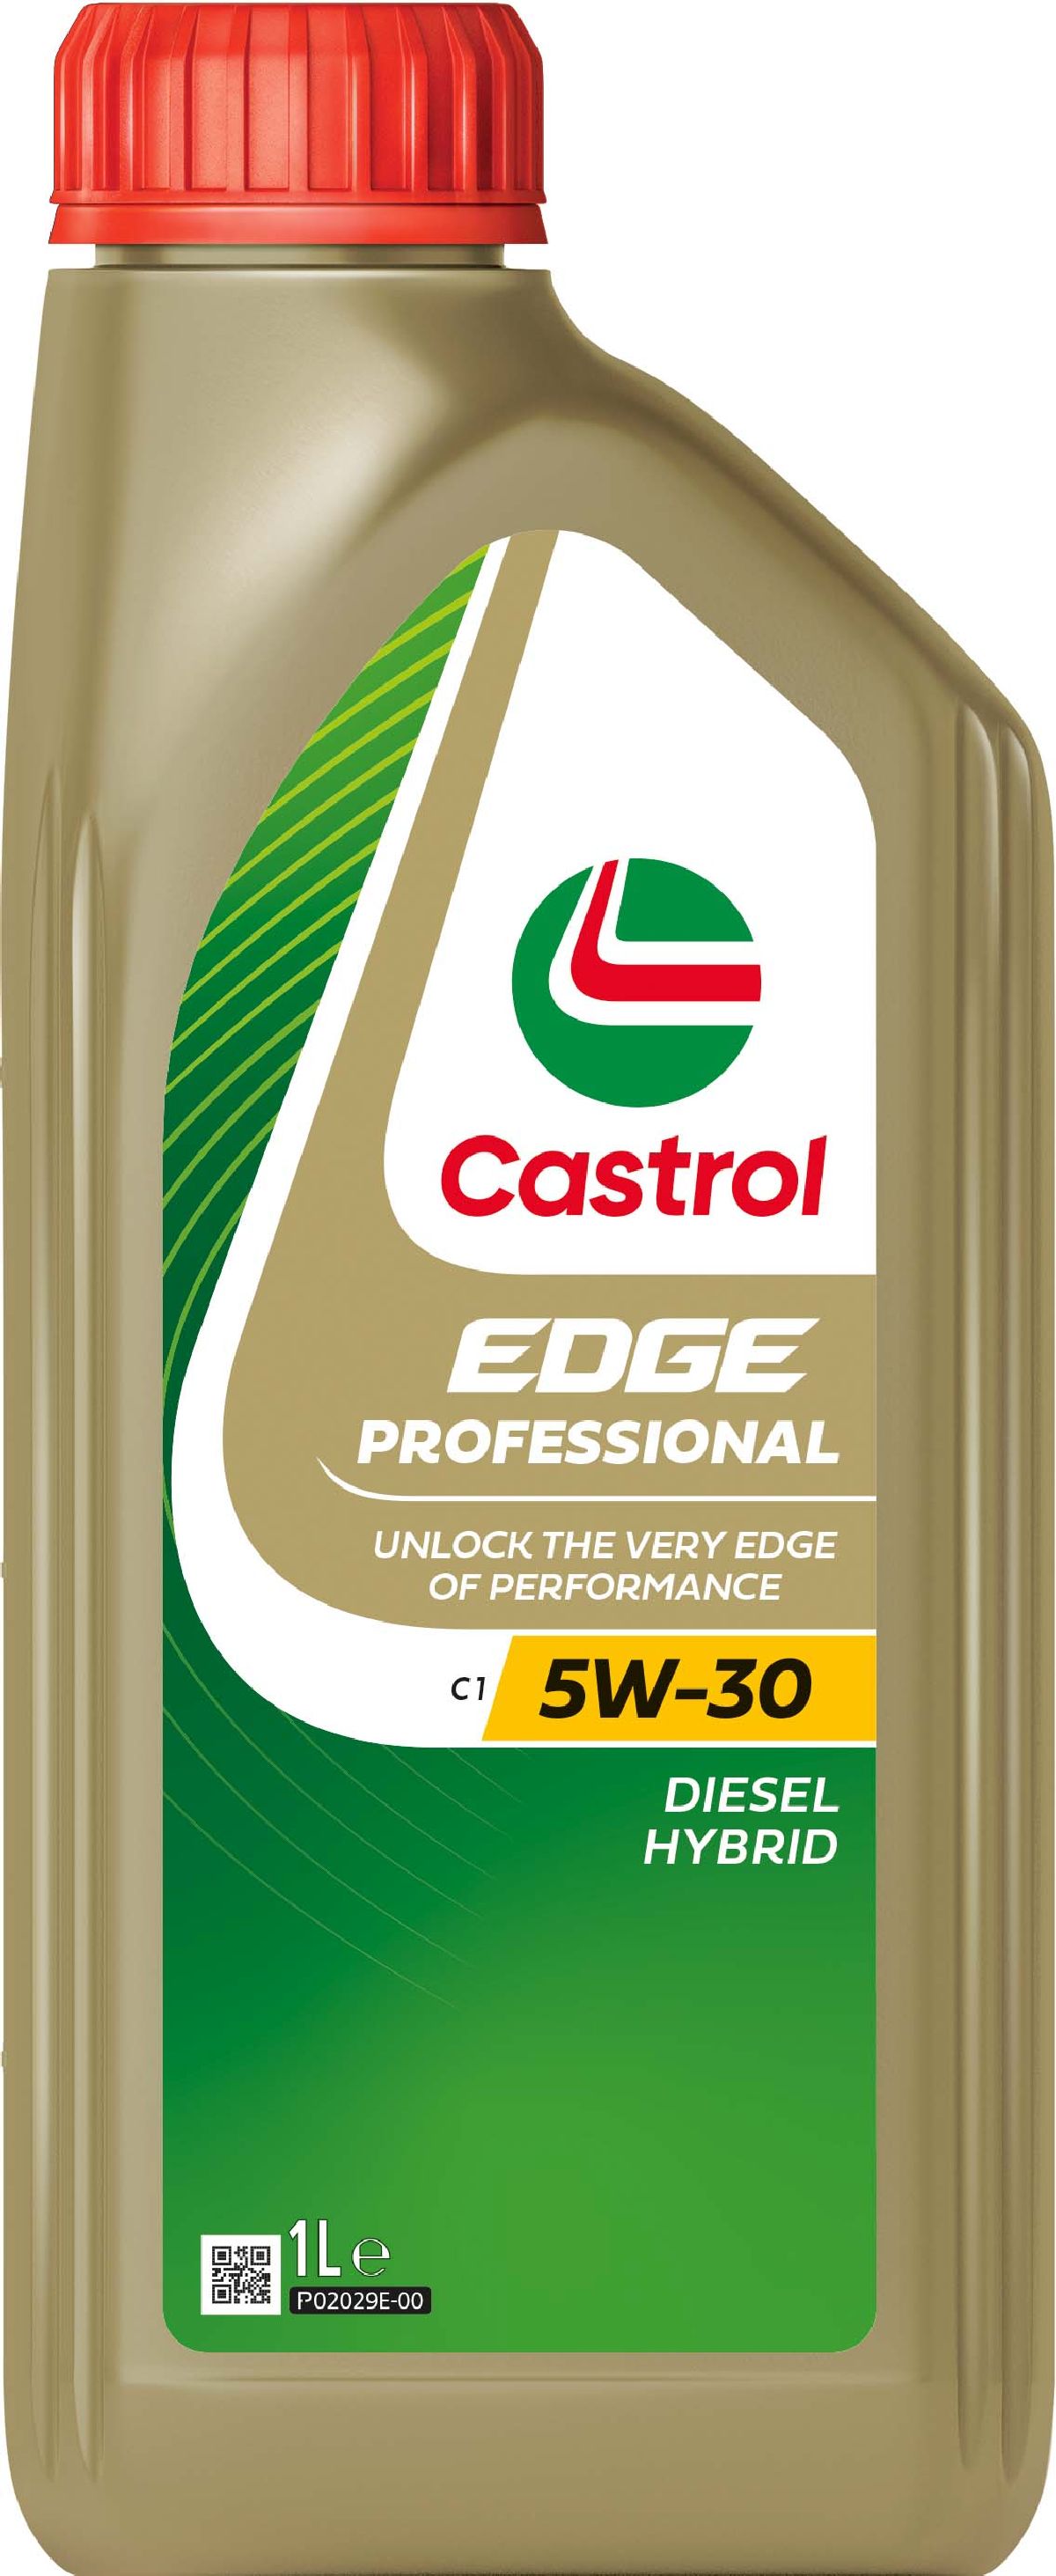 EDGE Professional C1 5W-30